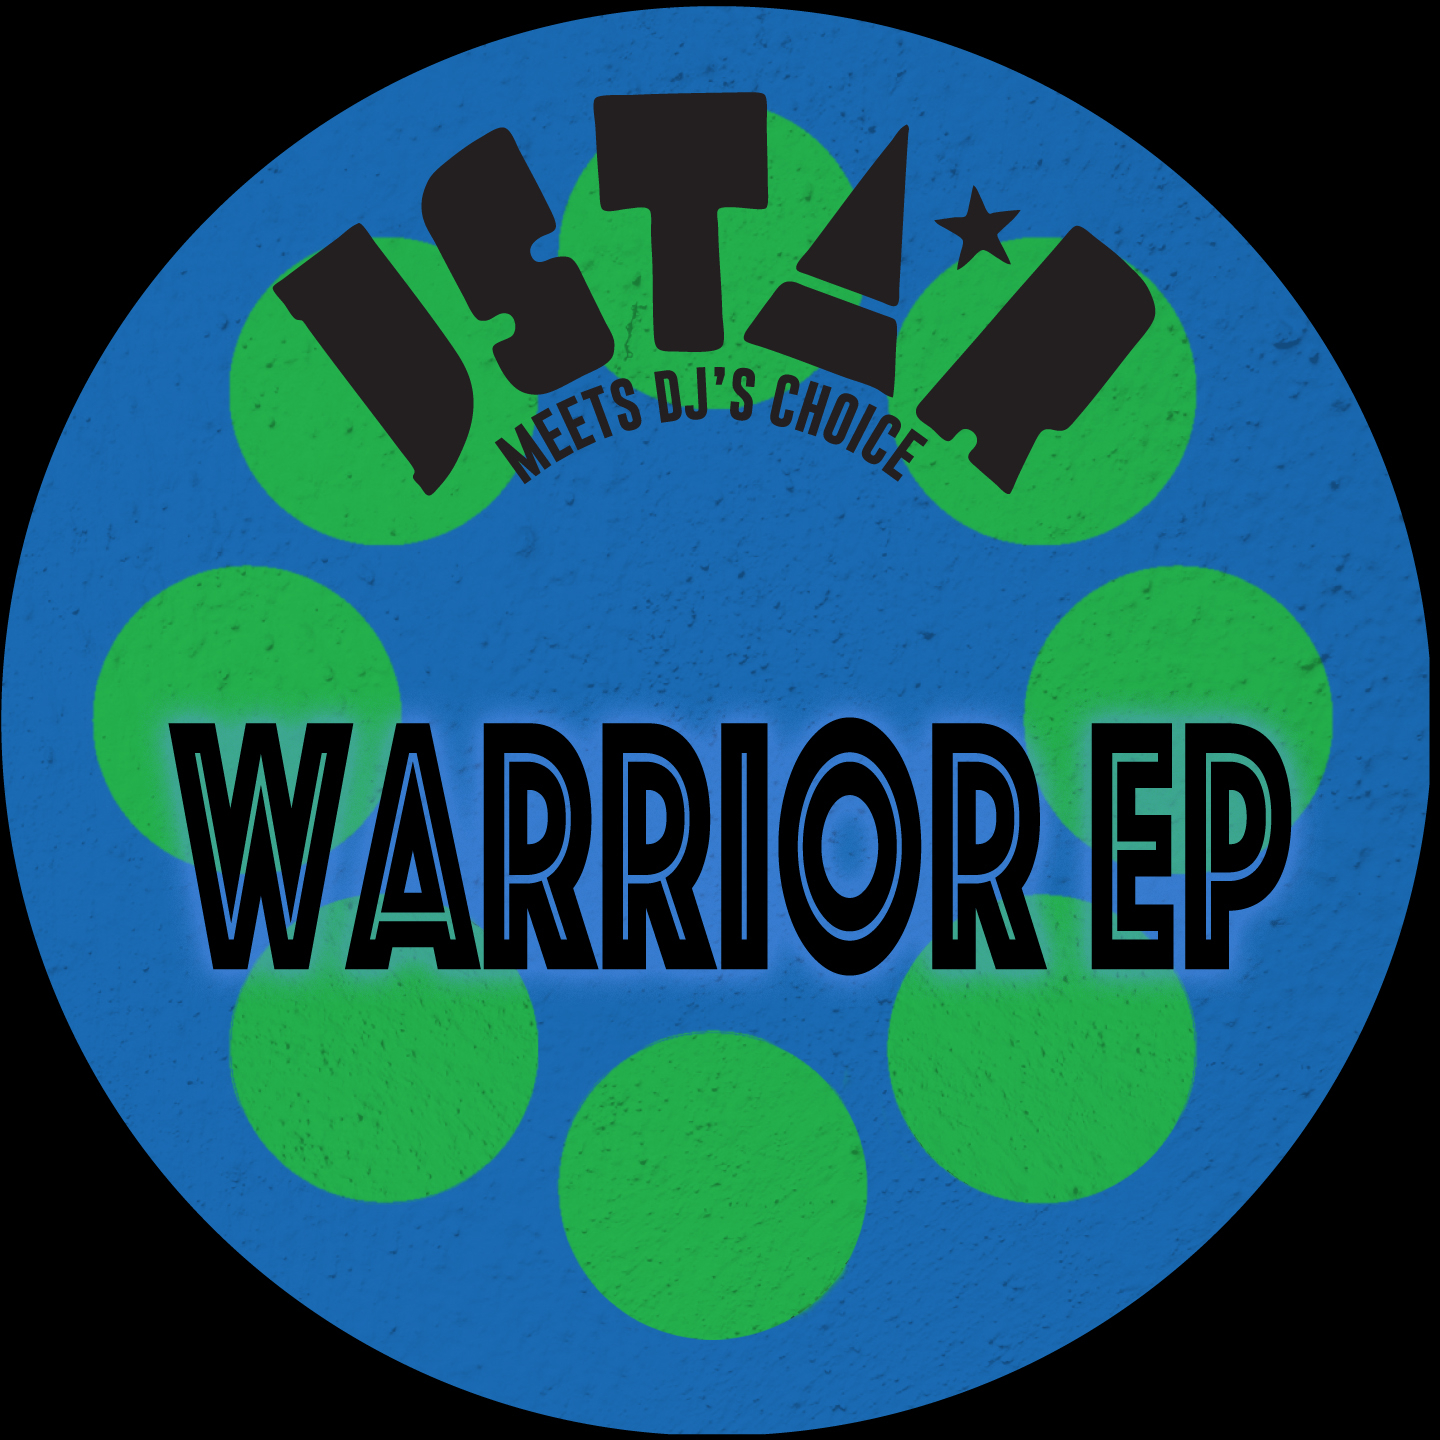 Jstar meet's DJ's Choice | “Warrior EP”